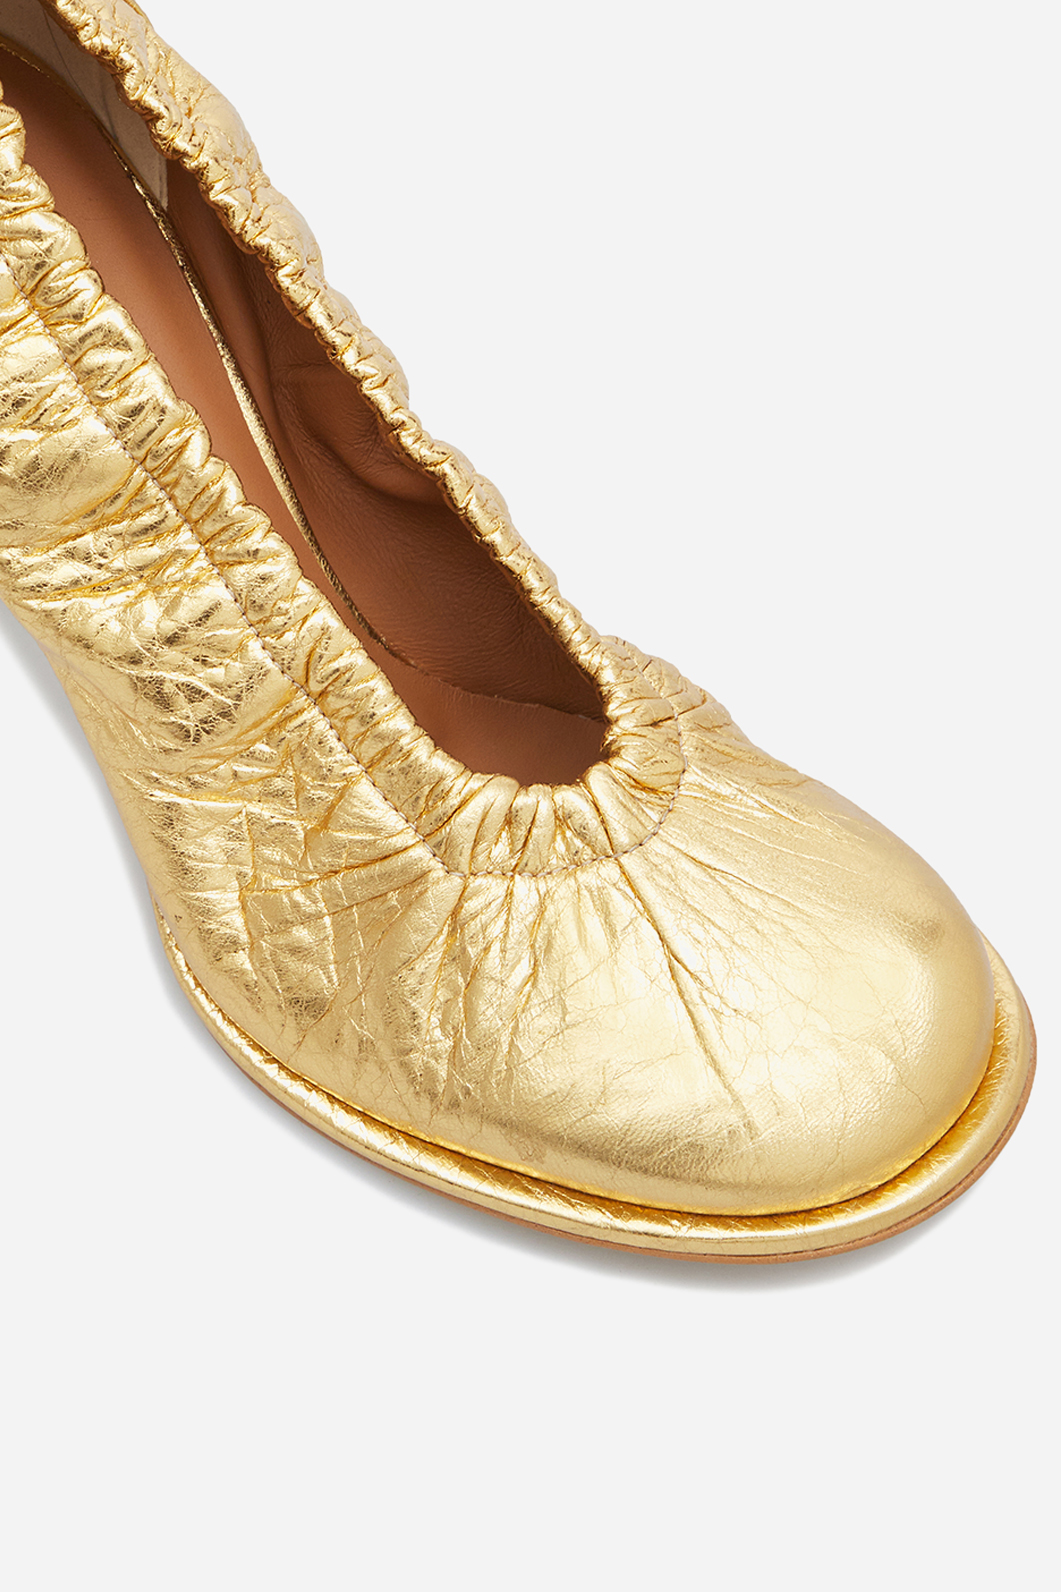 Camila gold leather pumps /7 cm/